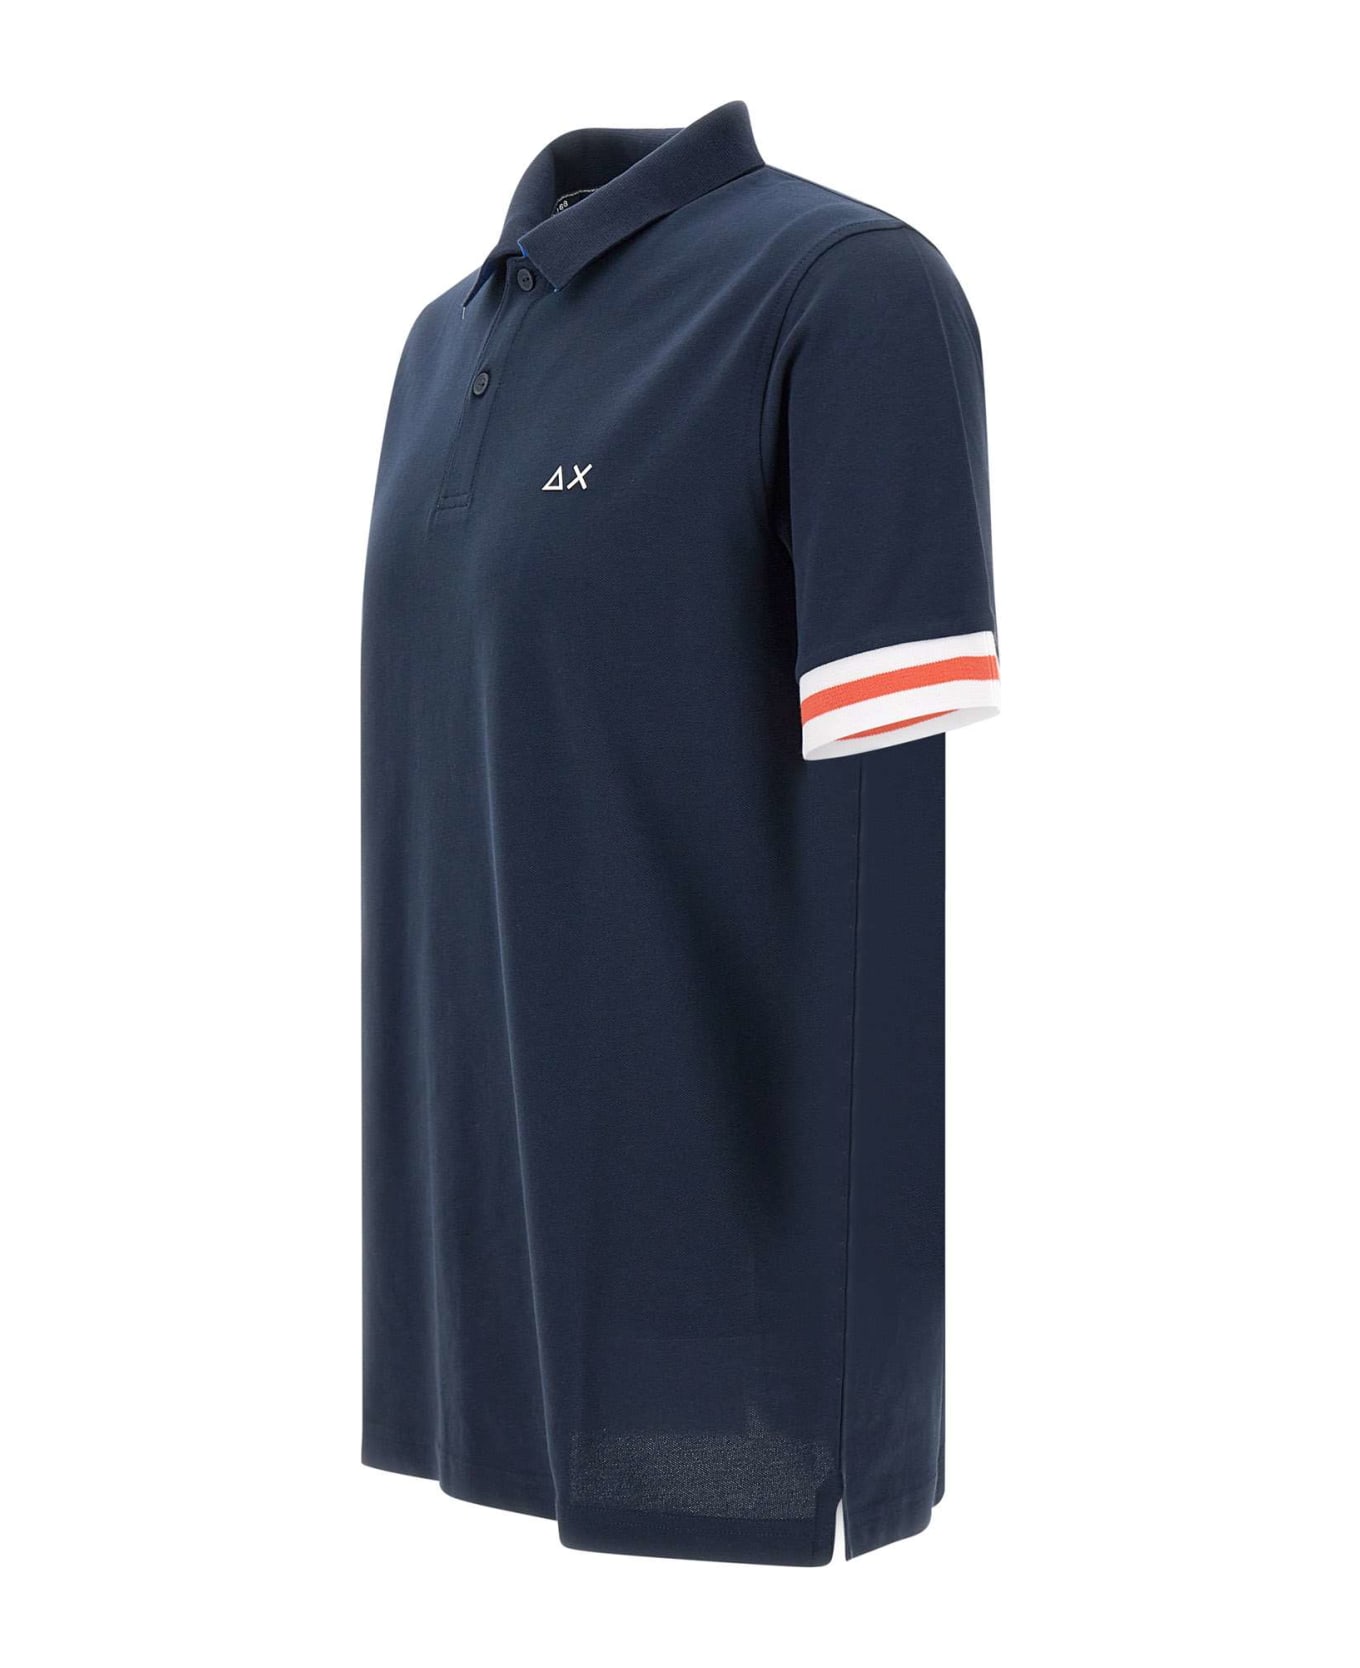 Sun 68 "stripes" Cotton Polo Shirt - BLUE ポロシャツ